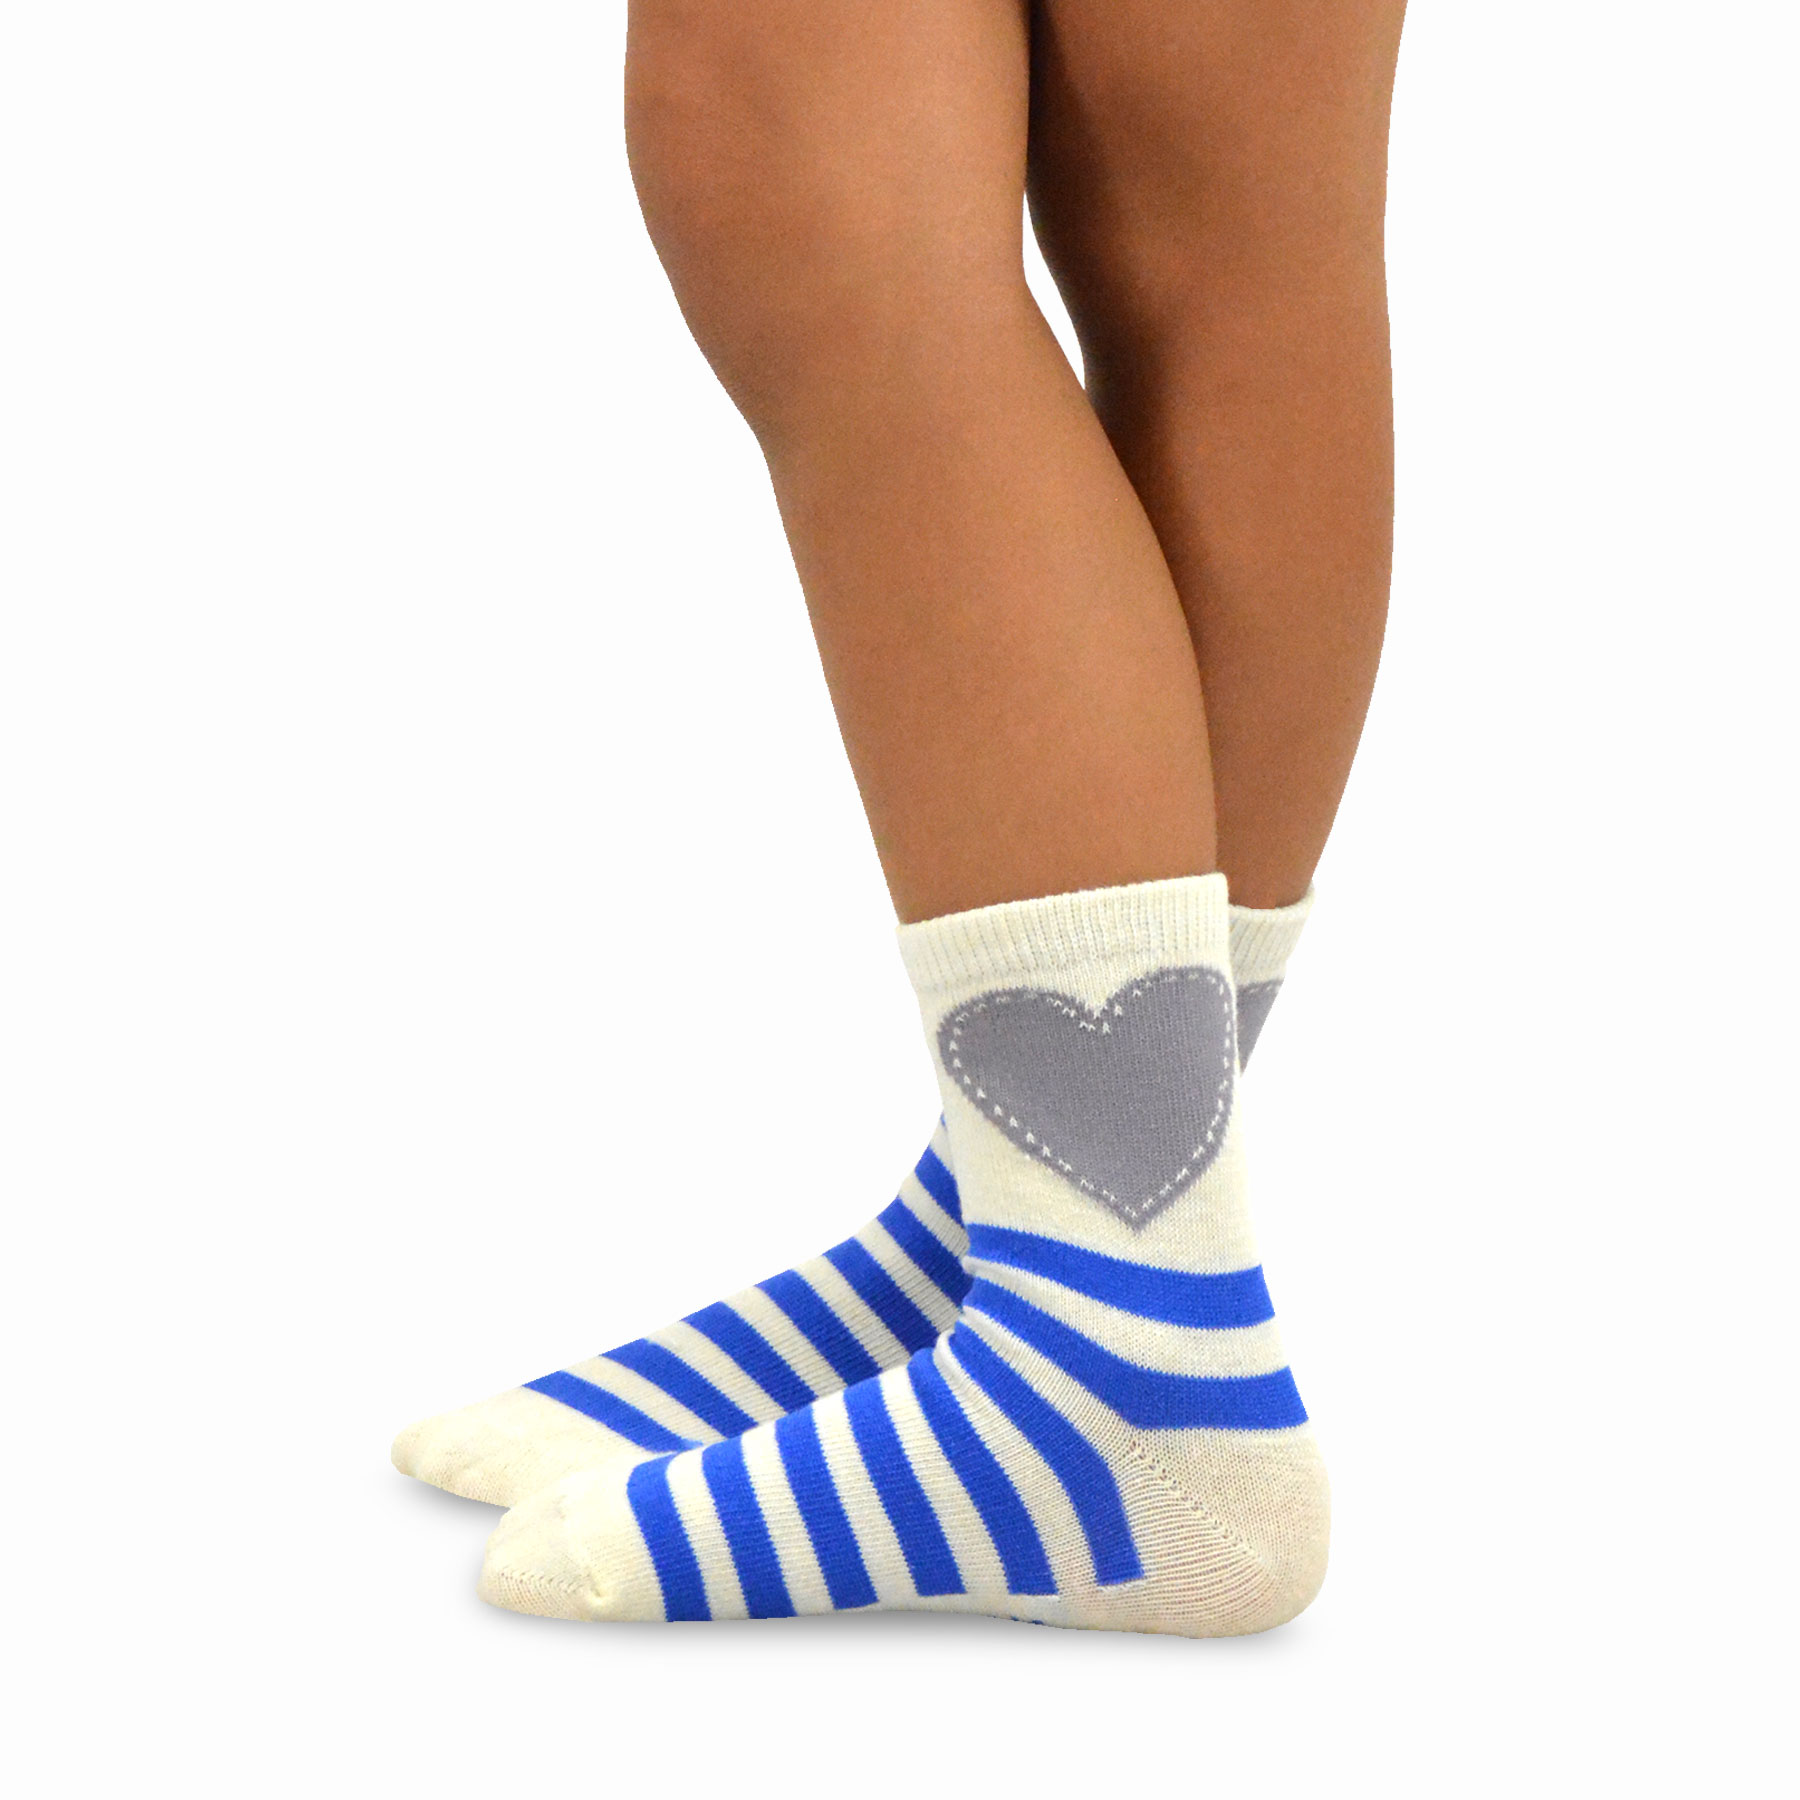 TeeHee Kids Cotton Fashion Crew Socks 6 Pair Pack for Girls - image 4 of 7